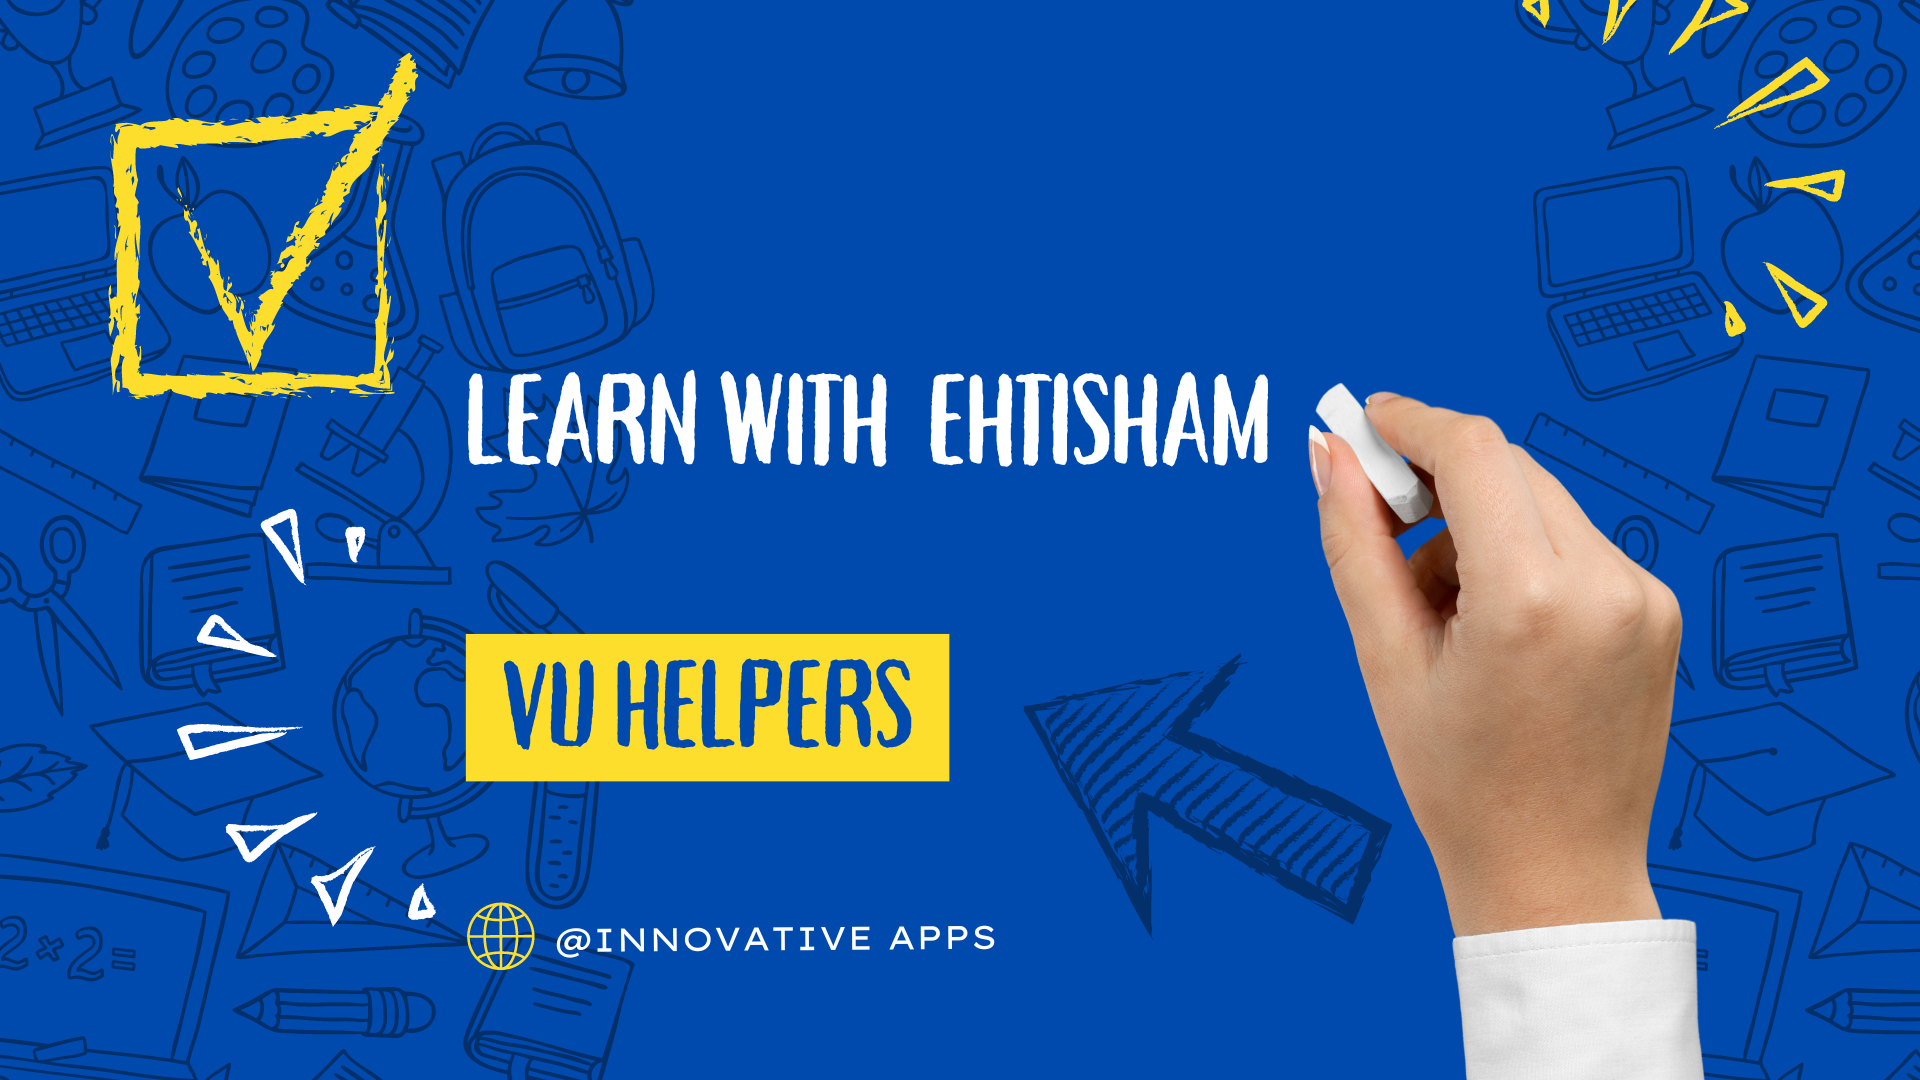 Learn with Ehtisham (VU HELPERS)